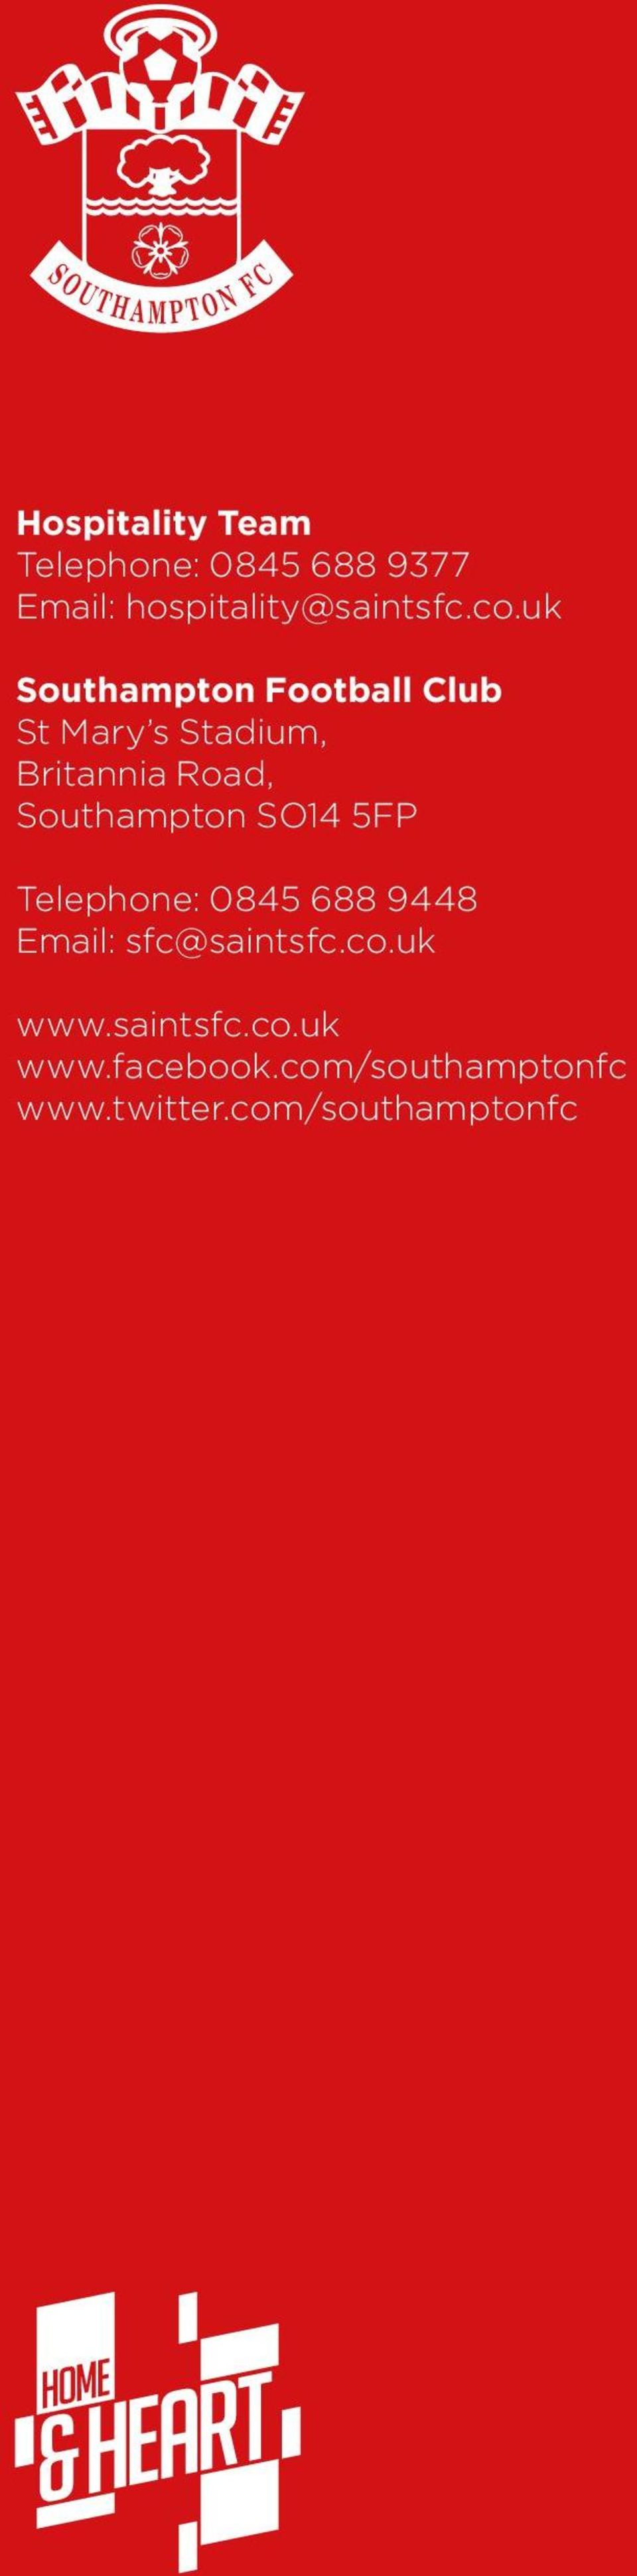 Southampton SO14 5FP Telephone: 0845 688 9448 Email: sfc@saintsfc.co.